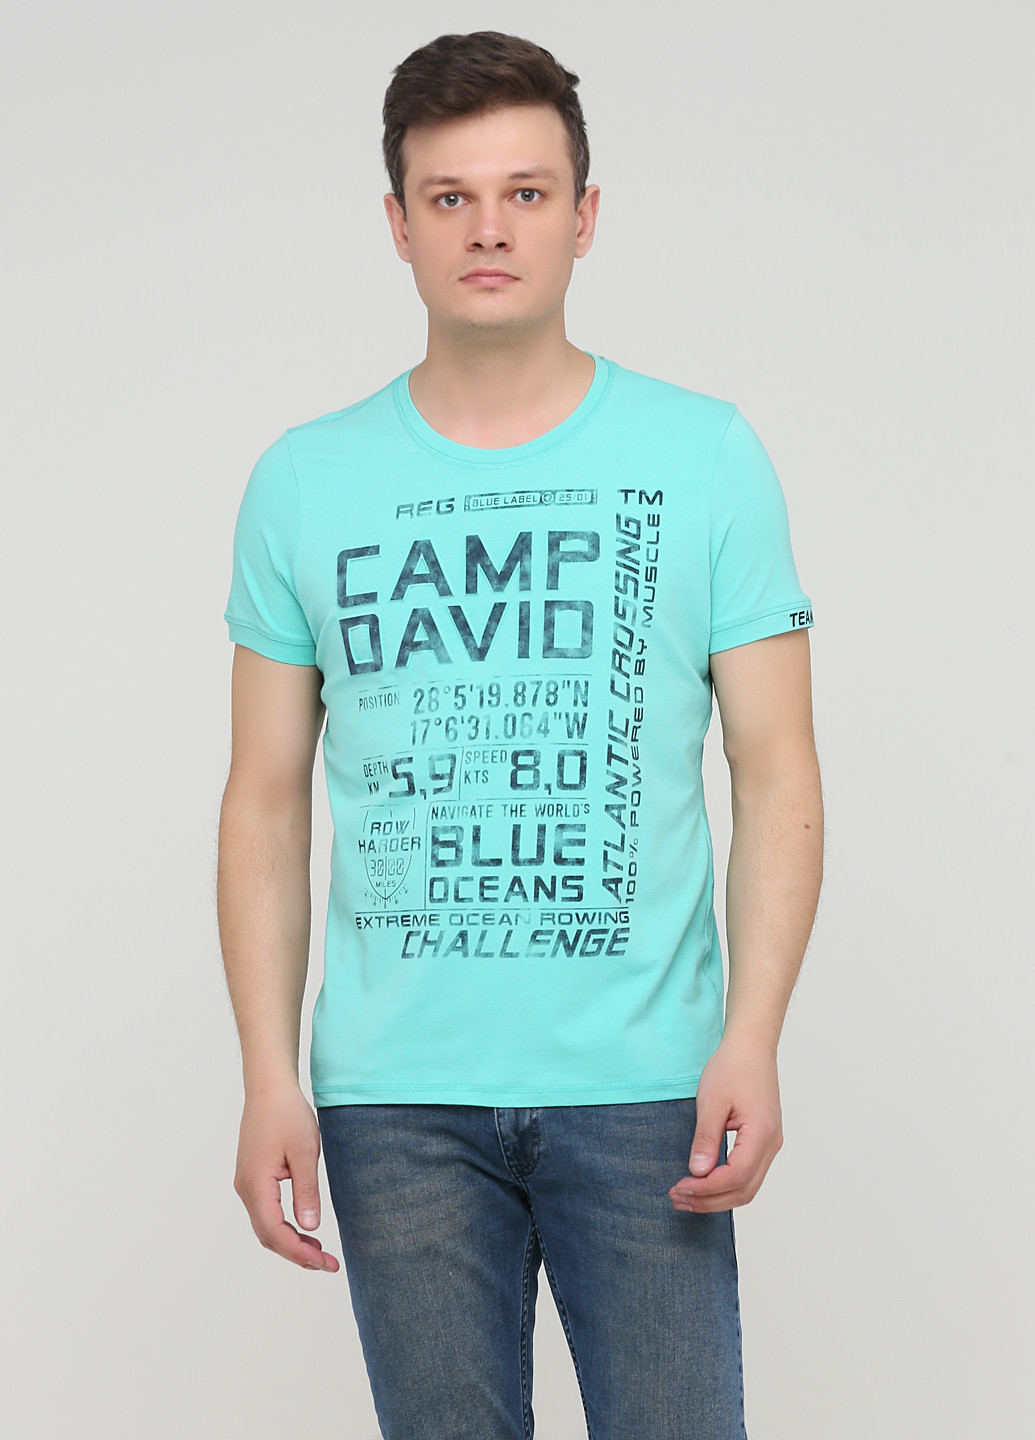 Светло-бирюзовая футболка Camp David